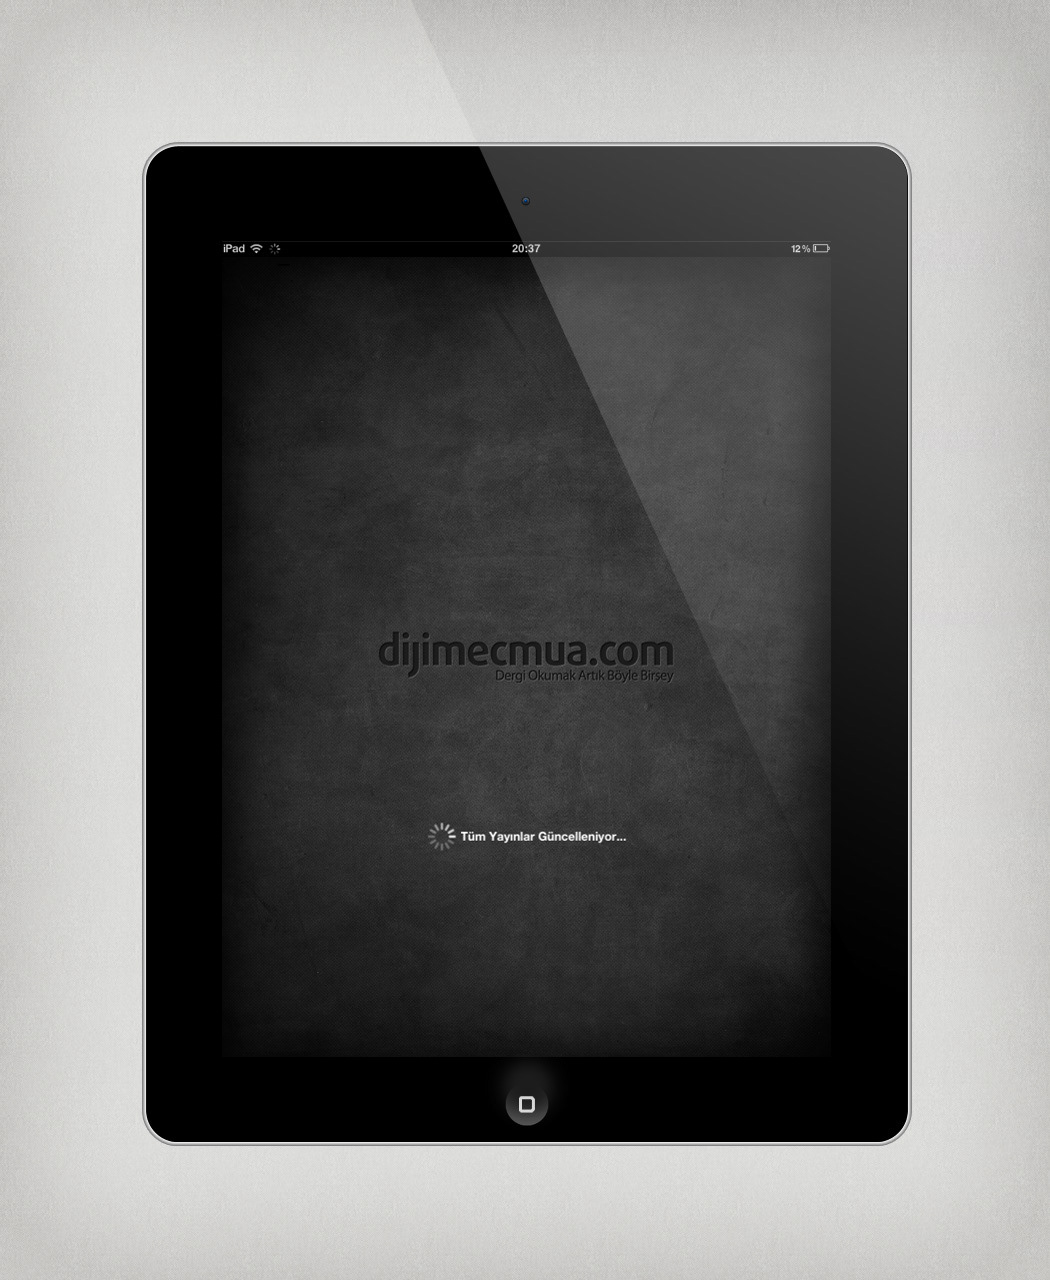 iPad application omergunes dijimecmua